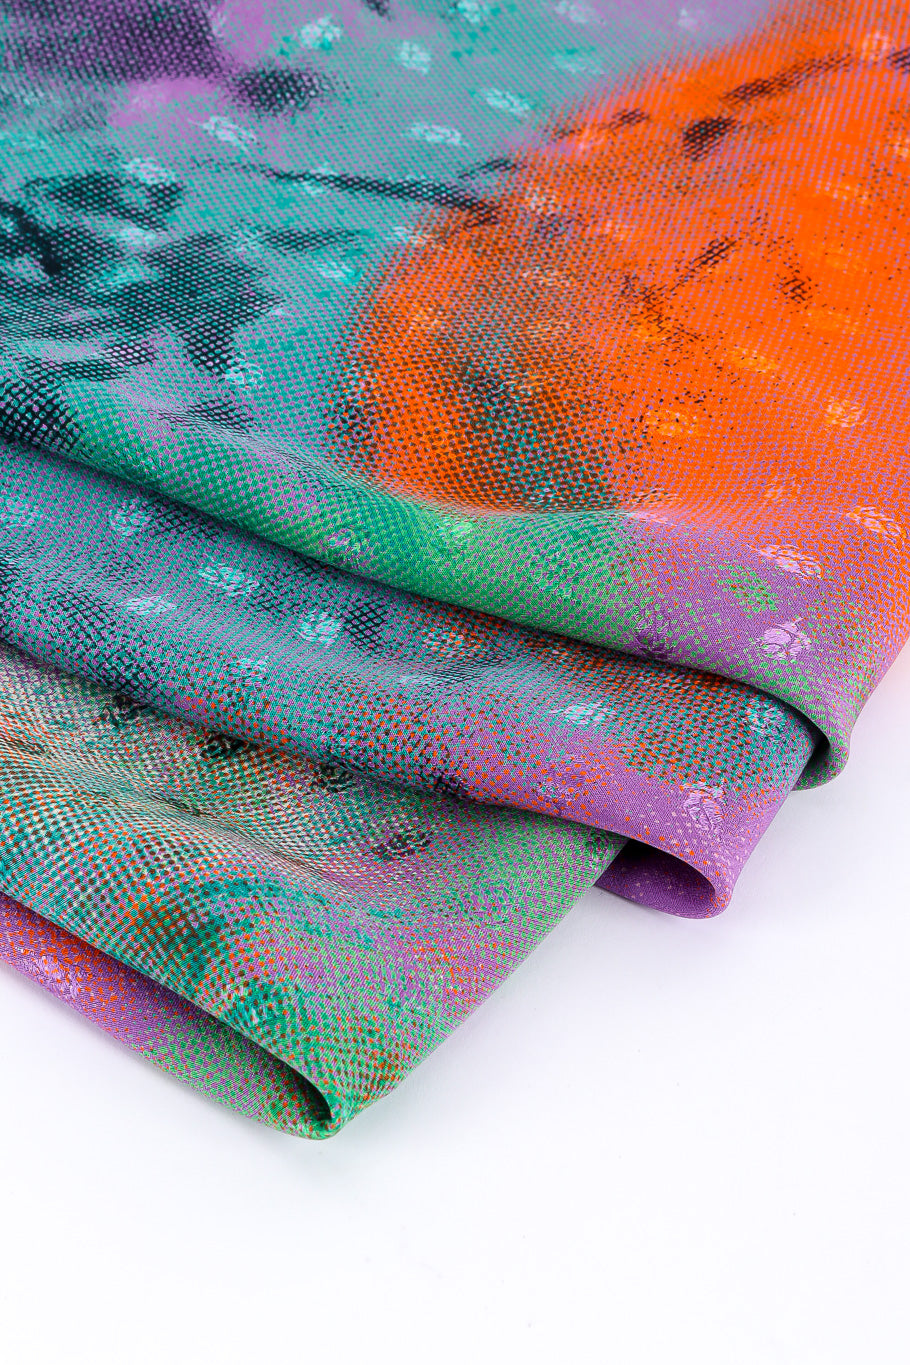 Silk crepe de chine scarf by Emanuel Ungaro Photo of Fabric Details. @recessla